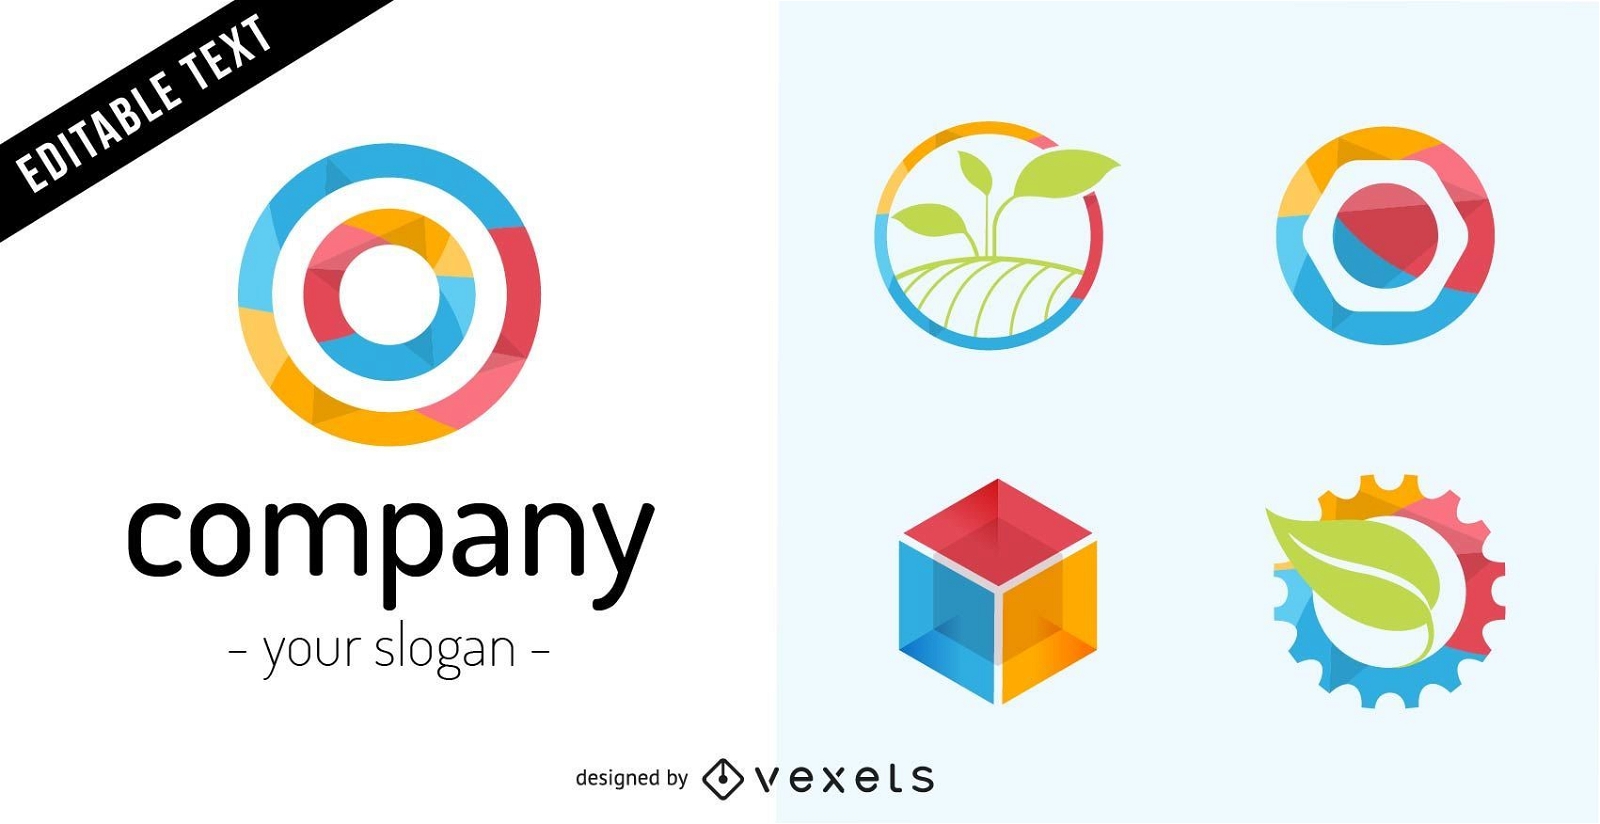 Company logo set in colorful tones